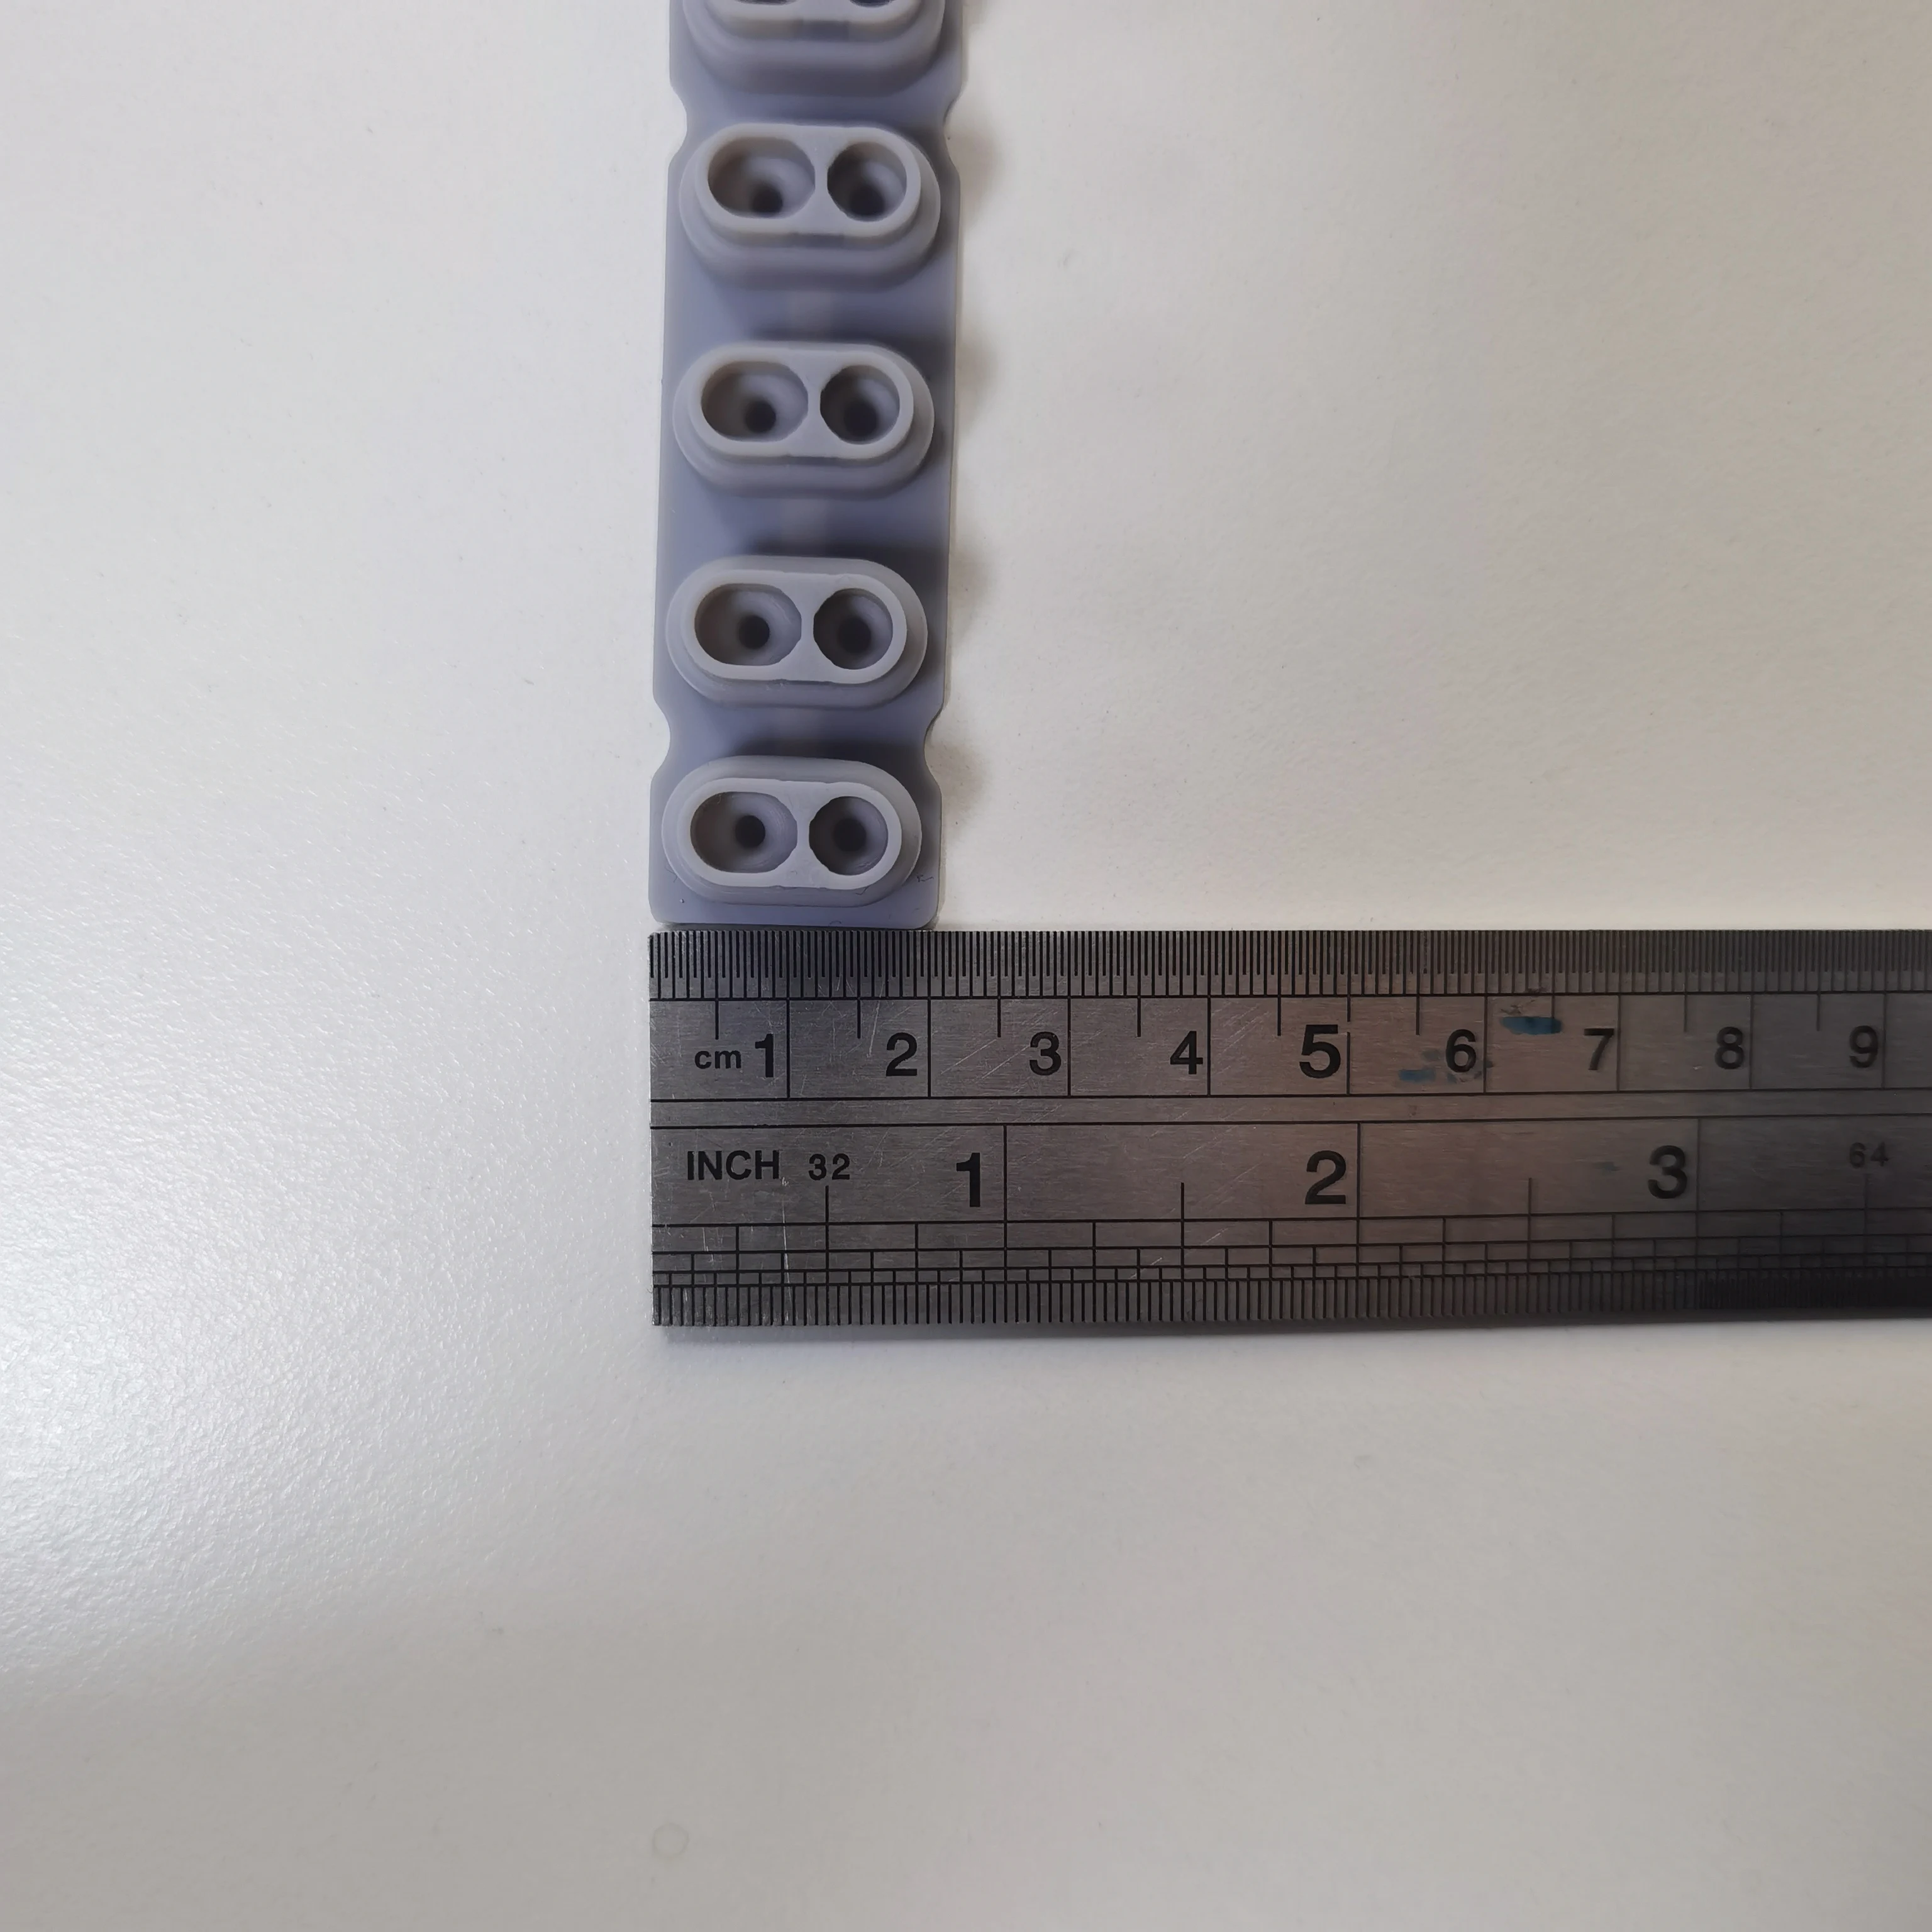 Conductive Rubber for Keyin Korg X50 Photo61 Krome M50 M3 Pa300 Pa500 Pa600 Pa1000 Pa900 Contact Pad Button D-Pad images - 6